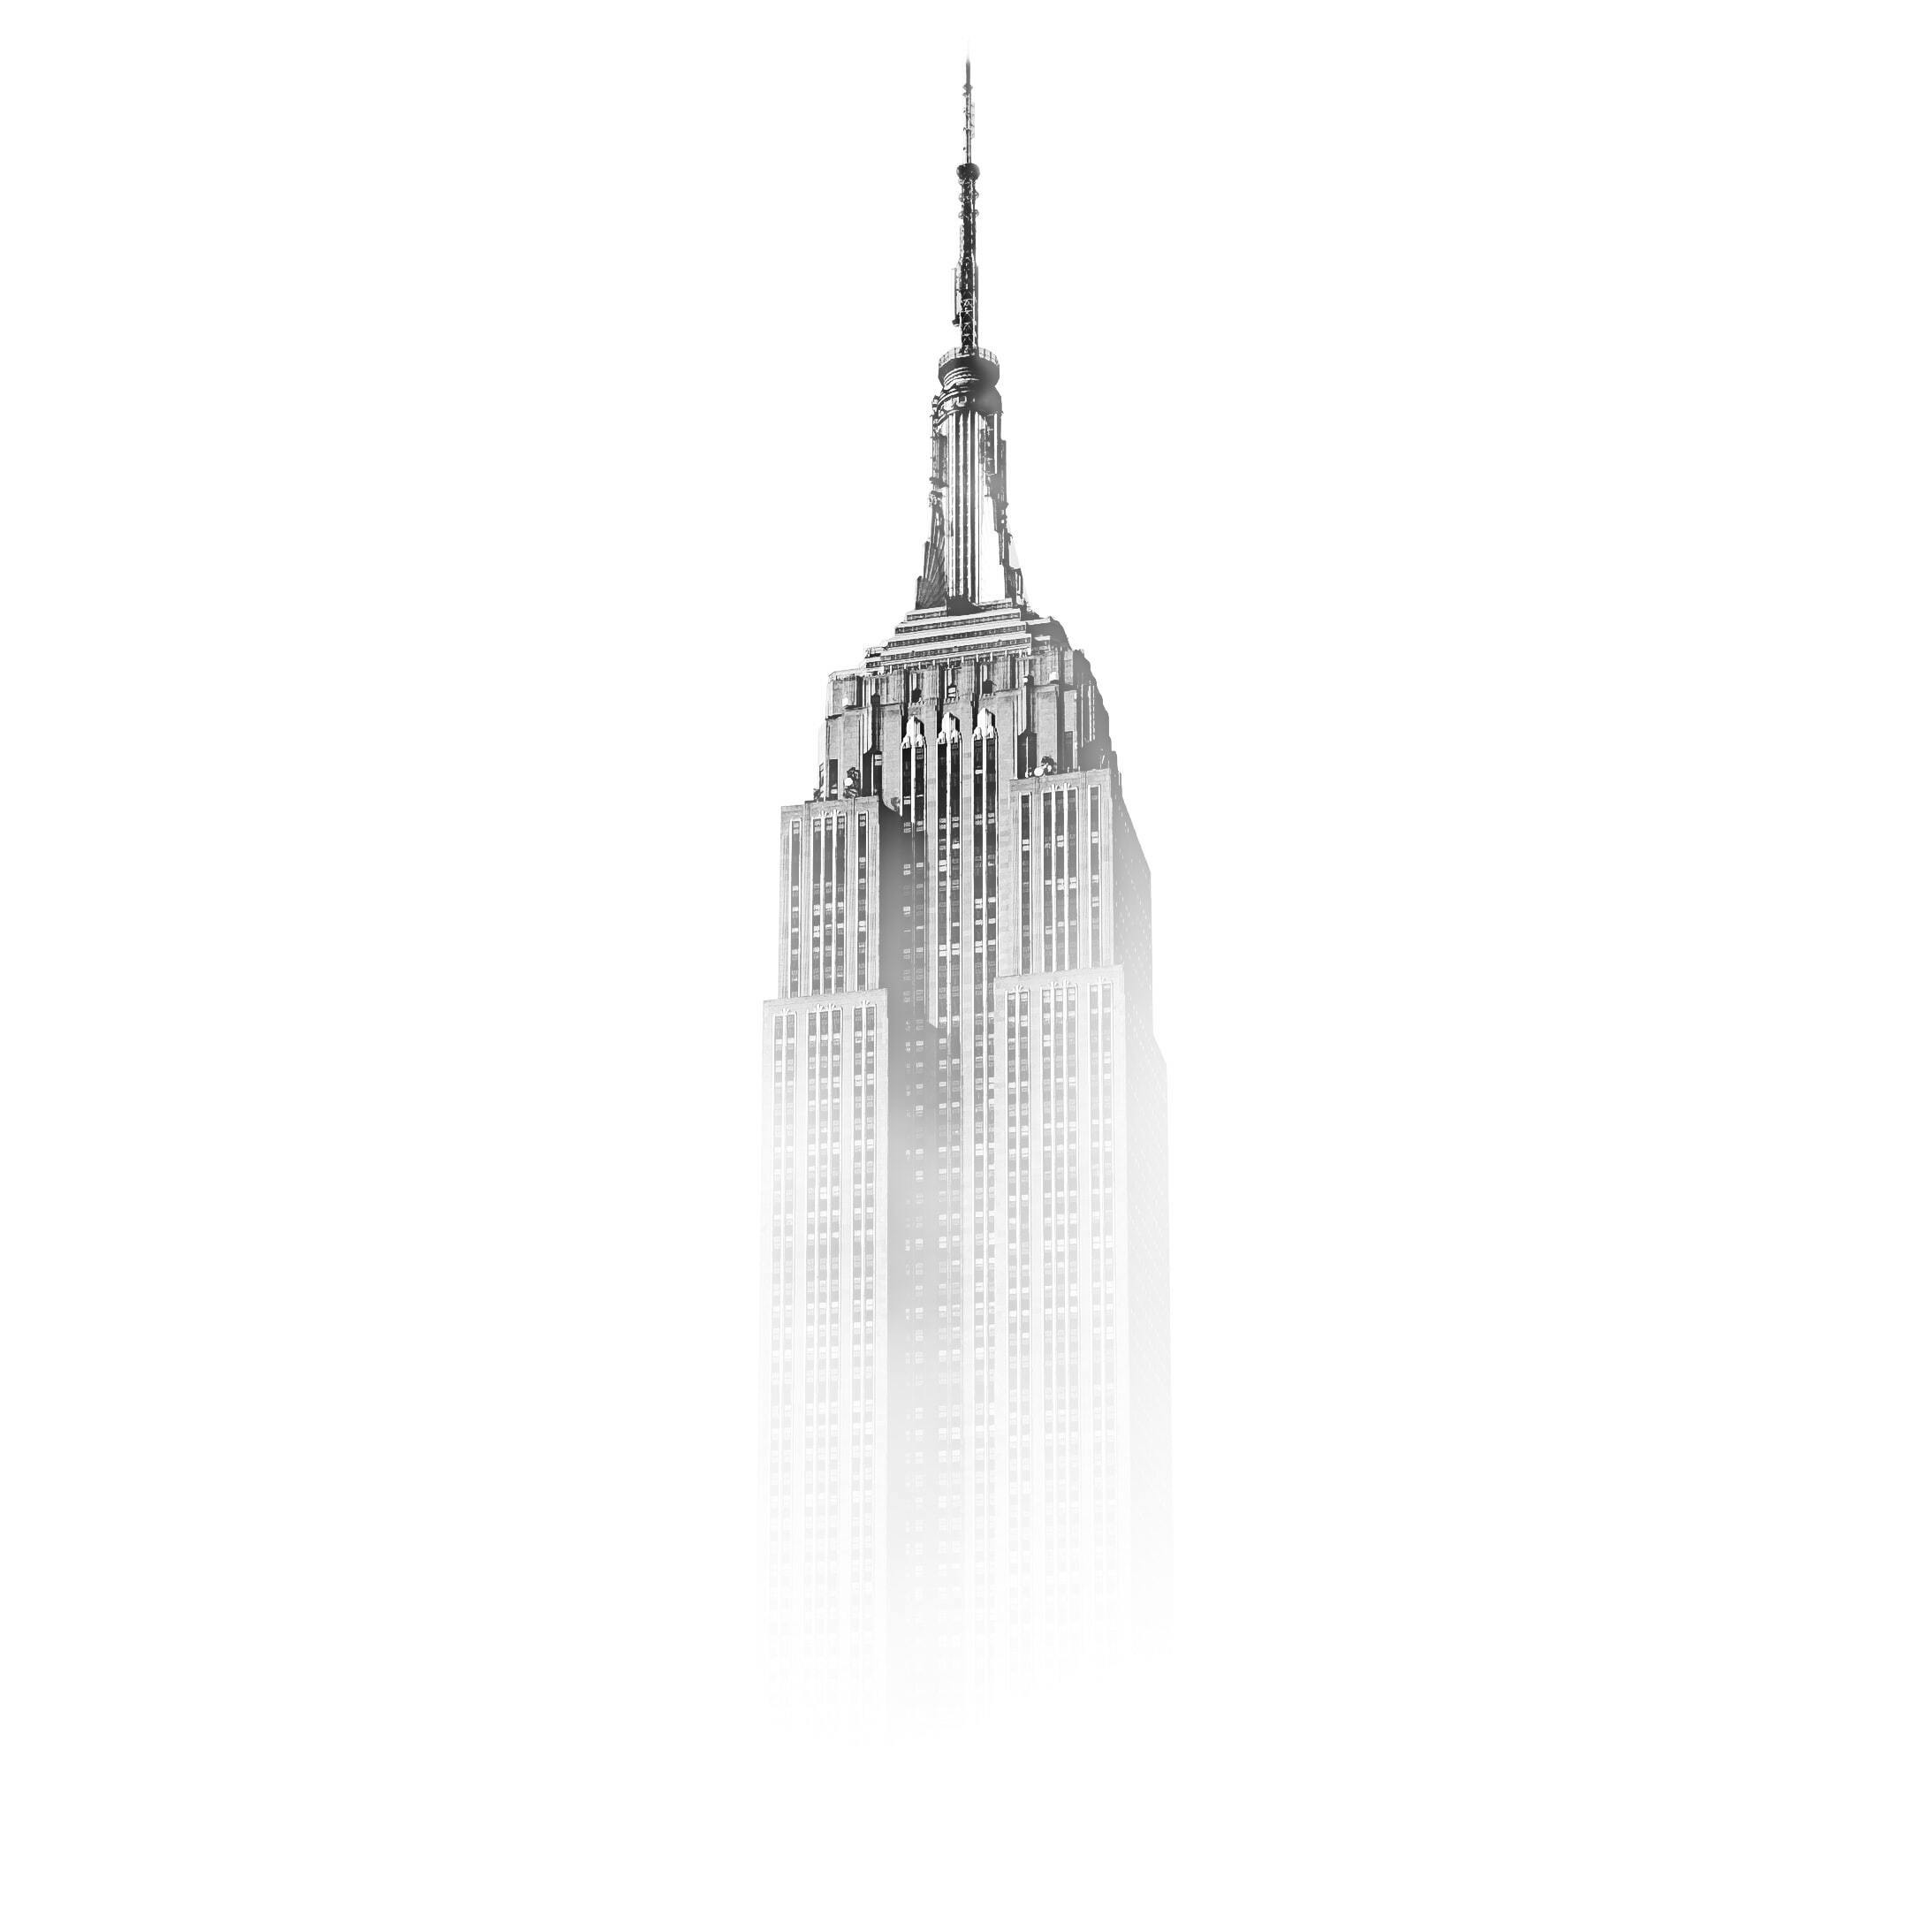 Edifício Empire State Photoshopizado